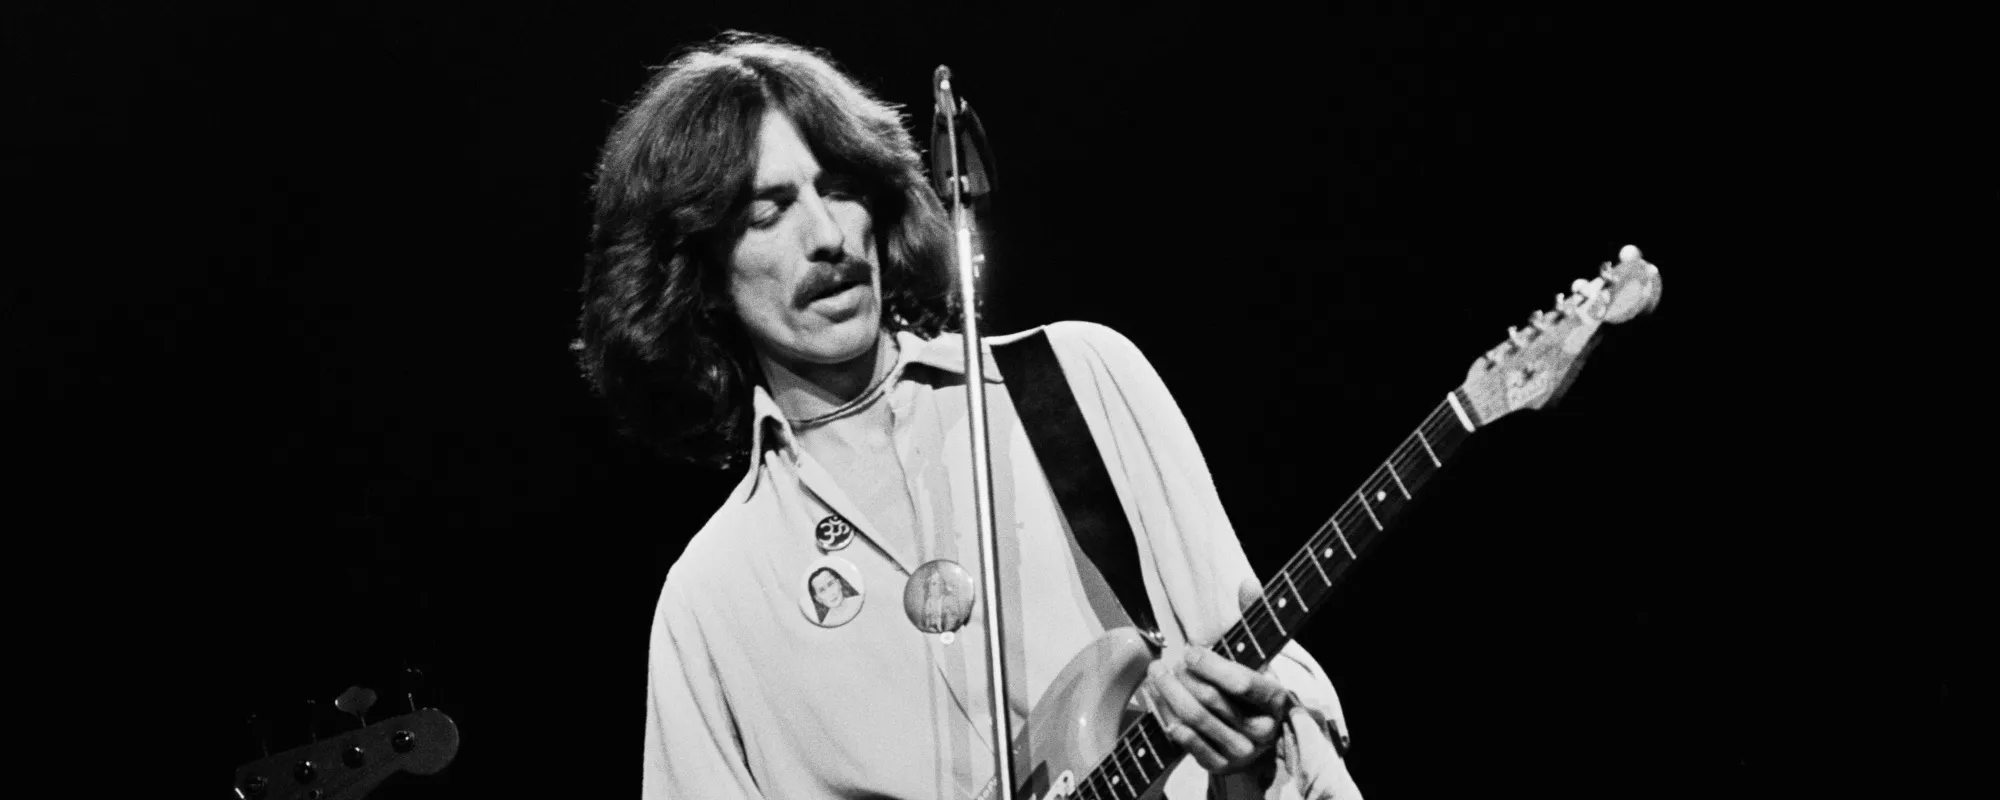 5 of George Harrison’s Favorite Songs by The Beatles